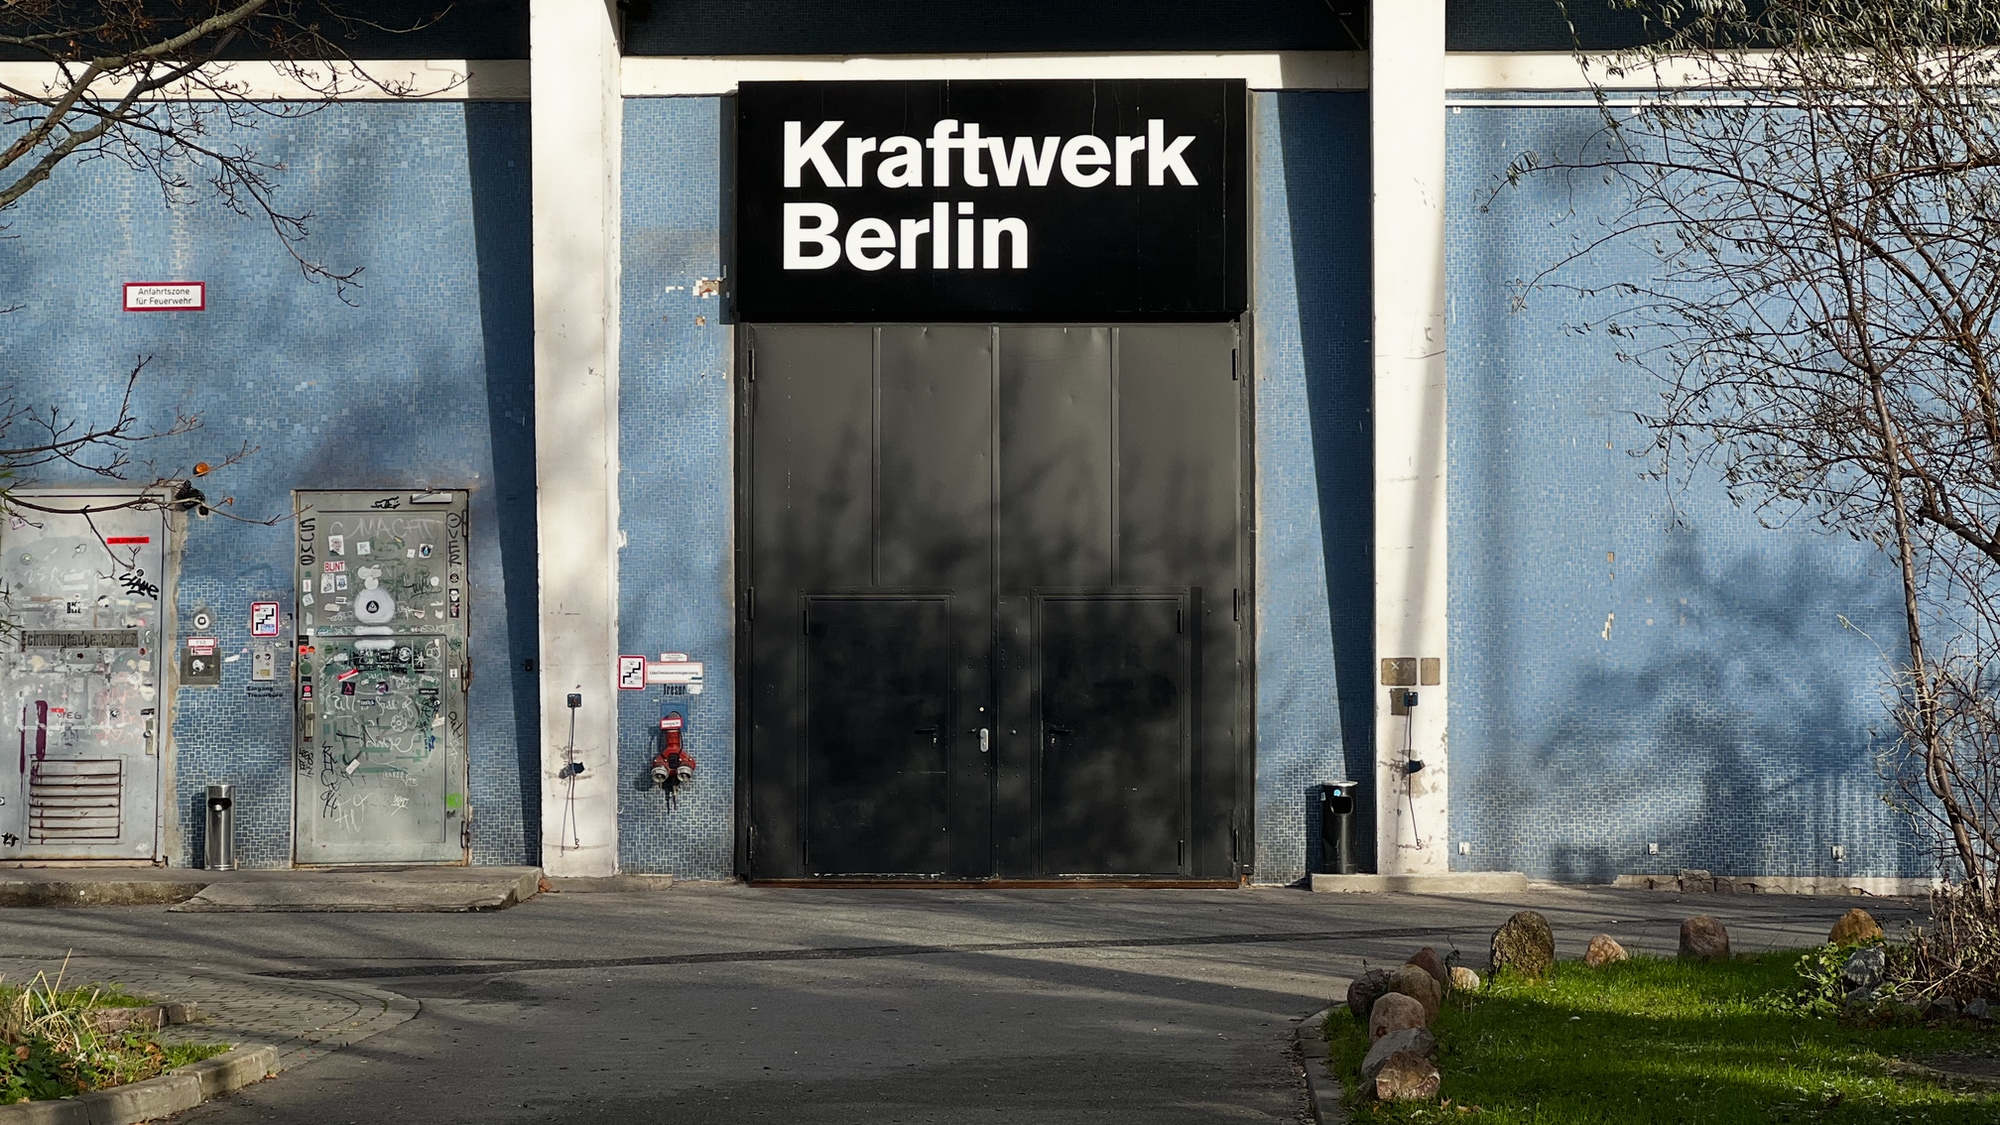 A photo taken at the Kraftwerk in Berlin.